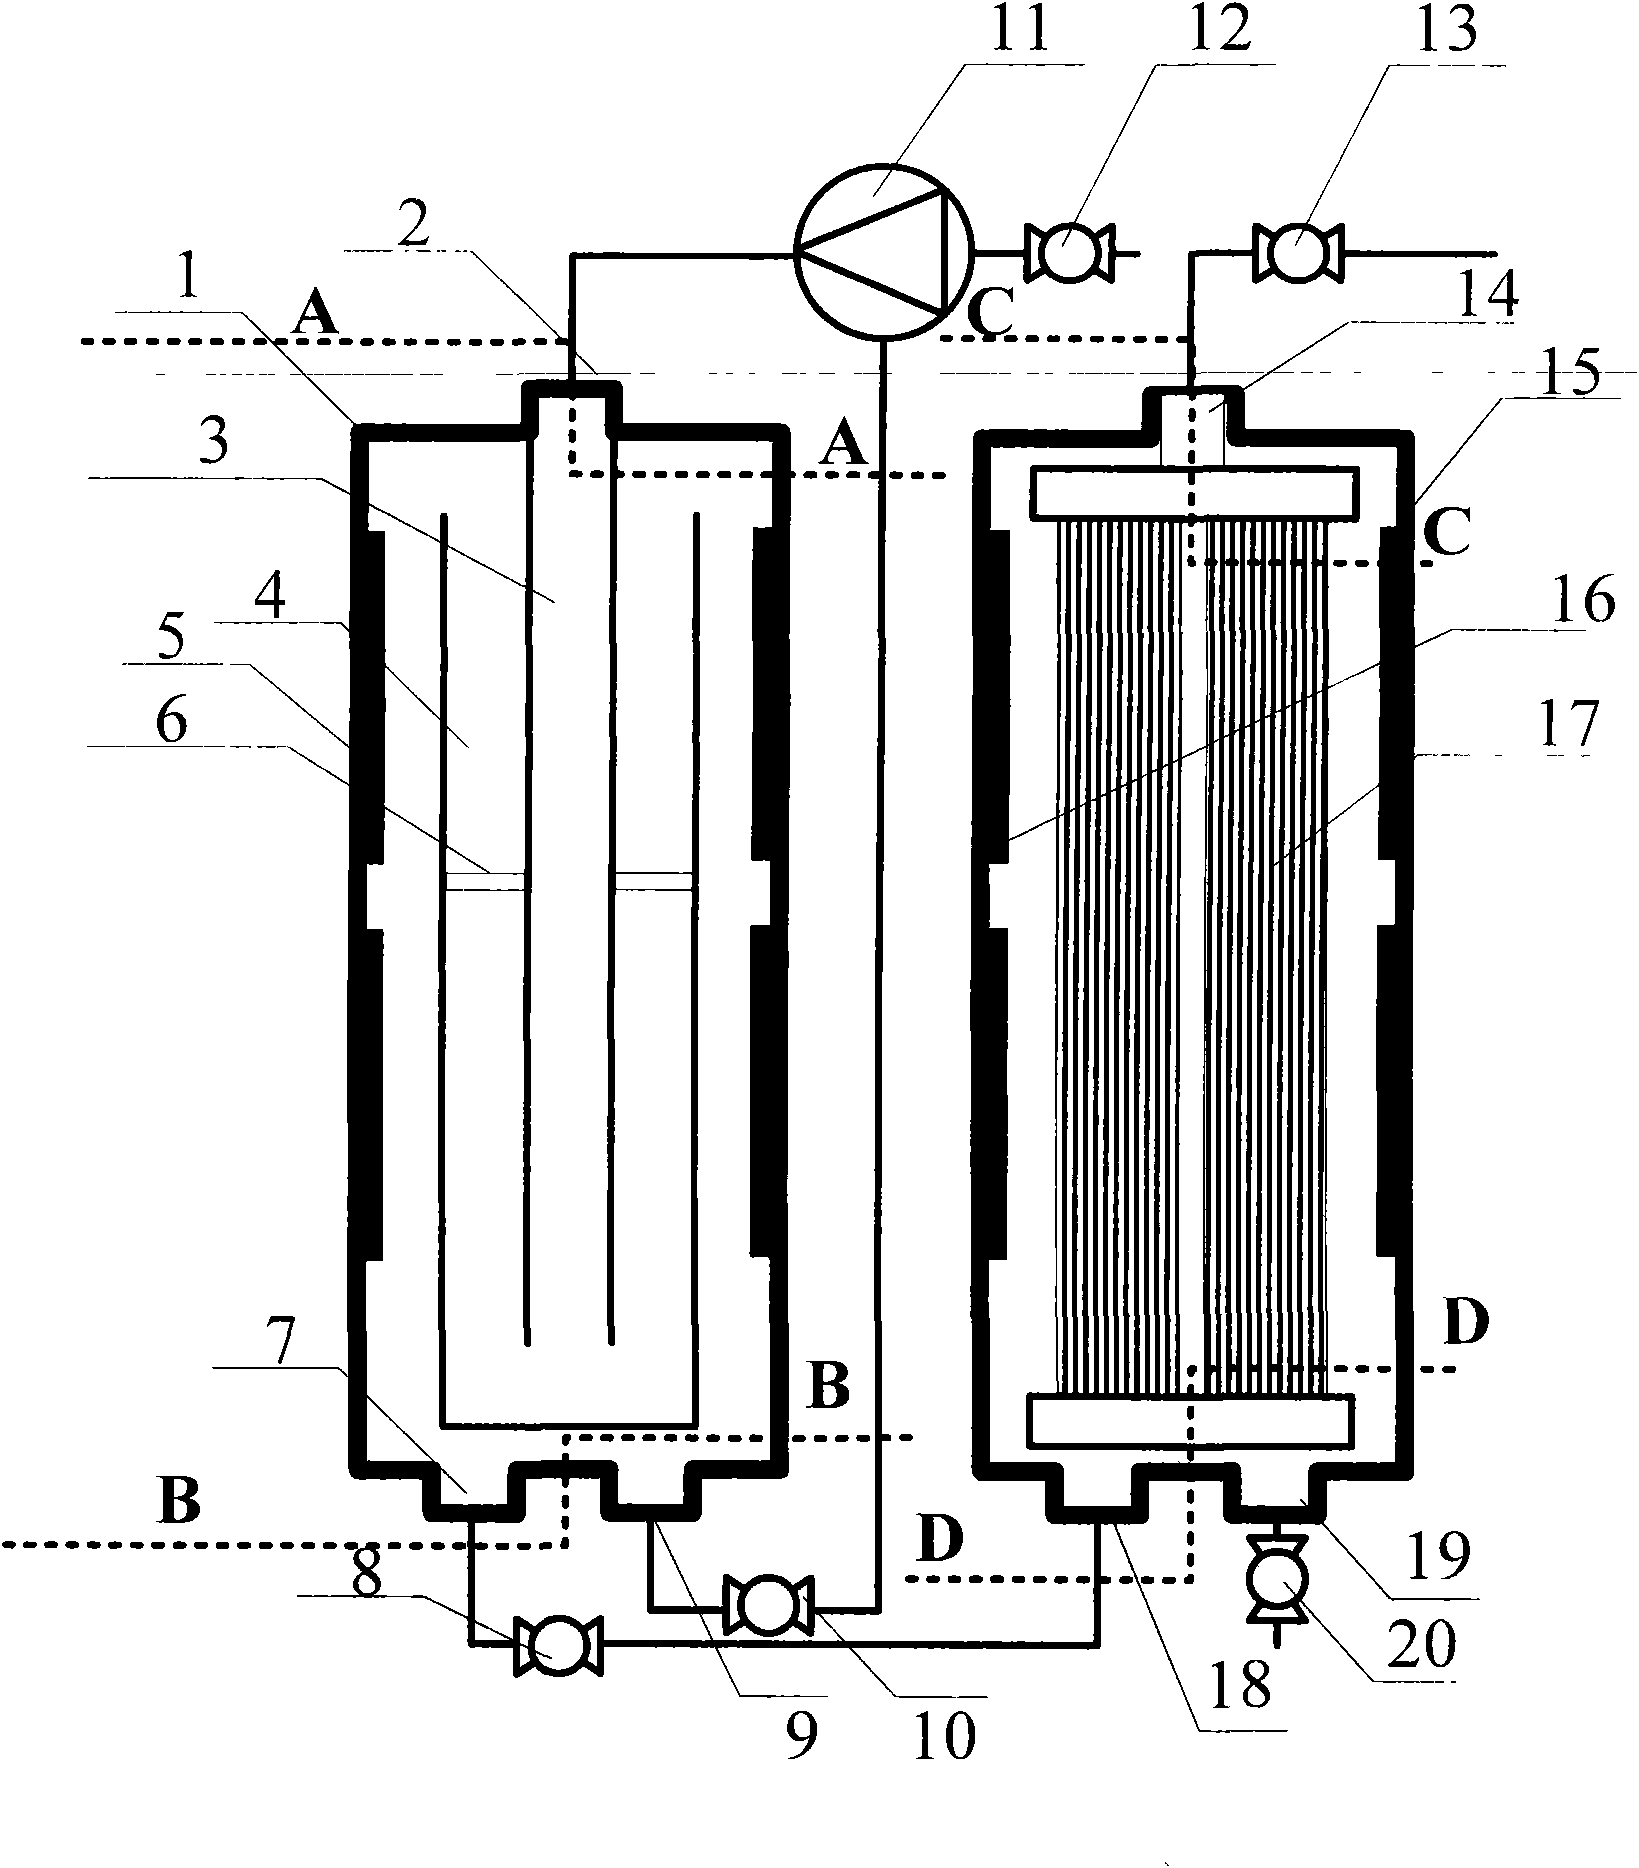 Magnetization-membrane filtering device